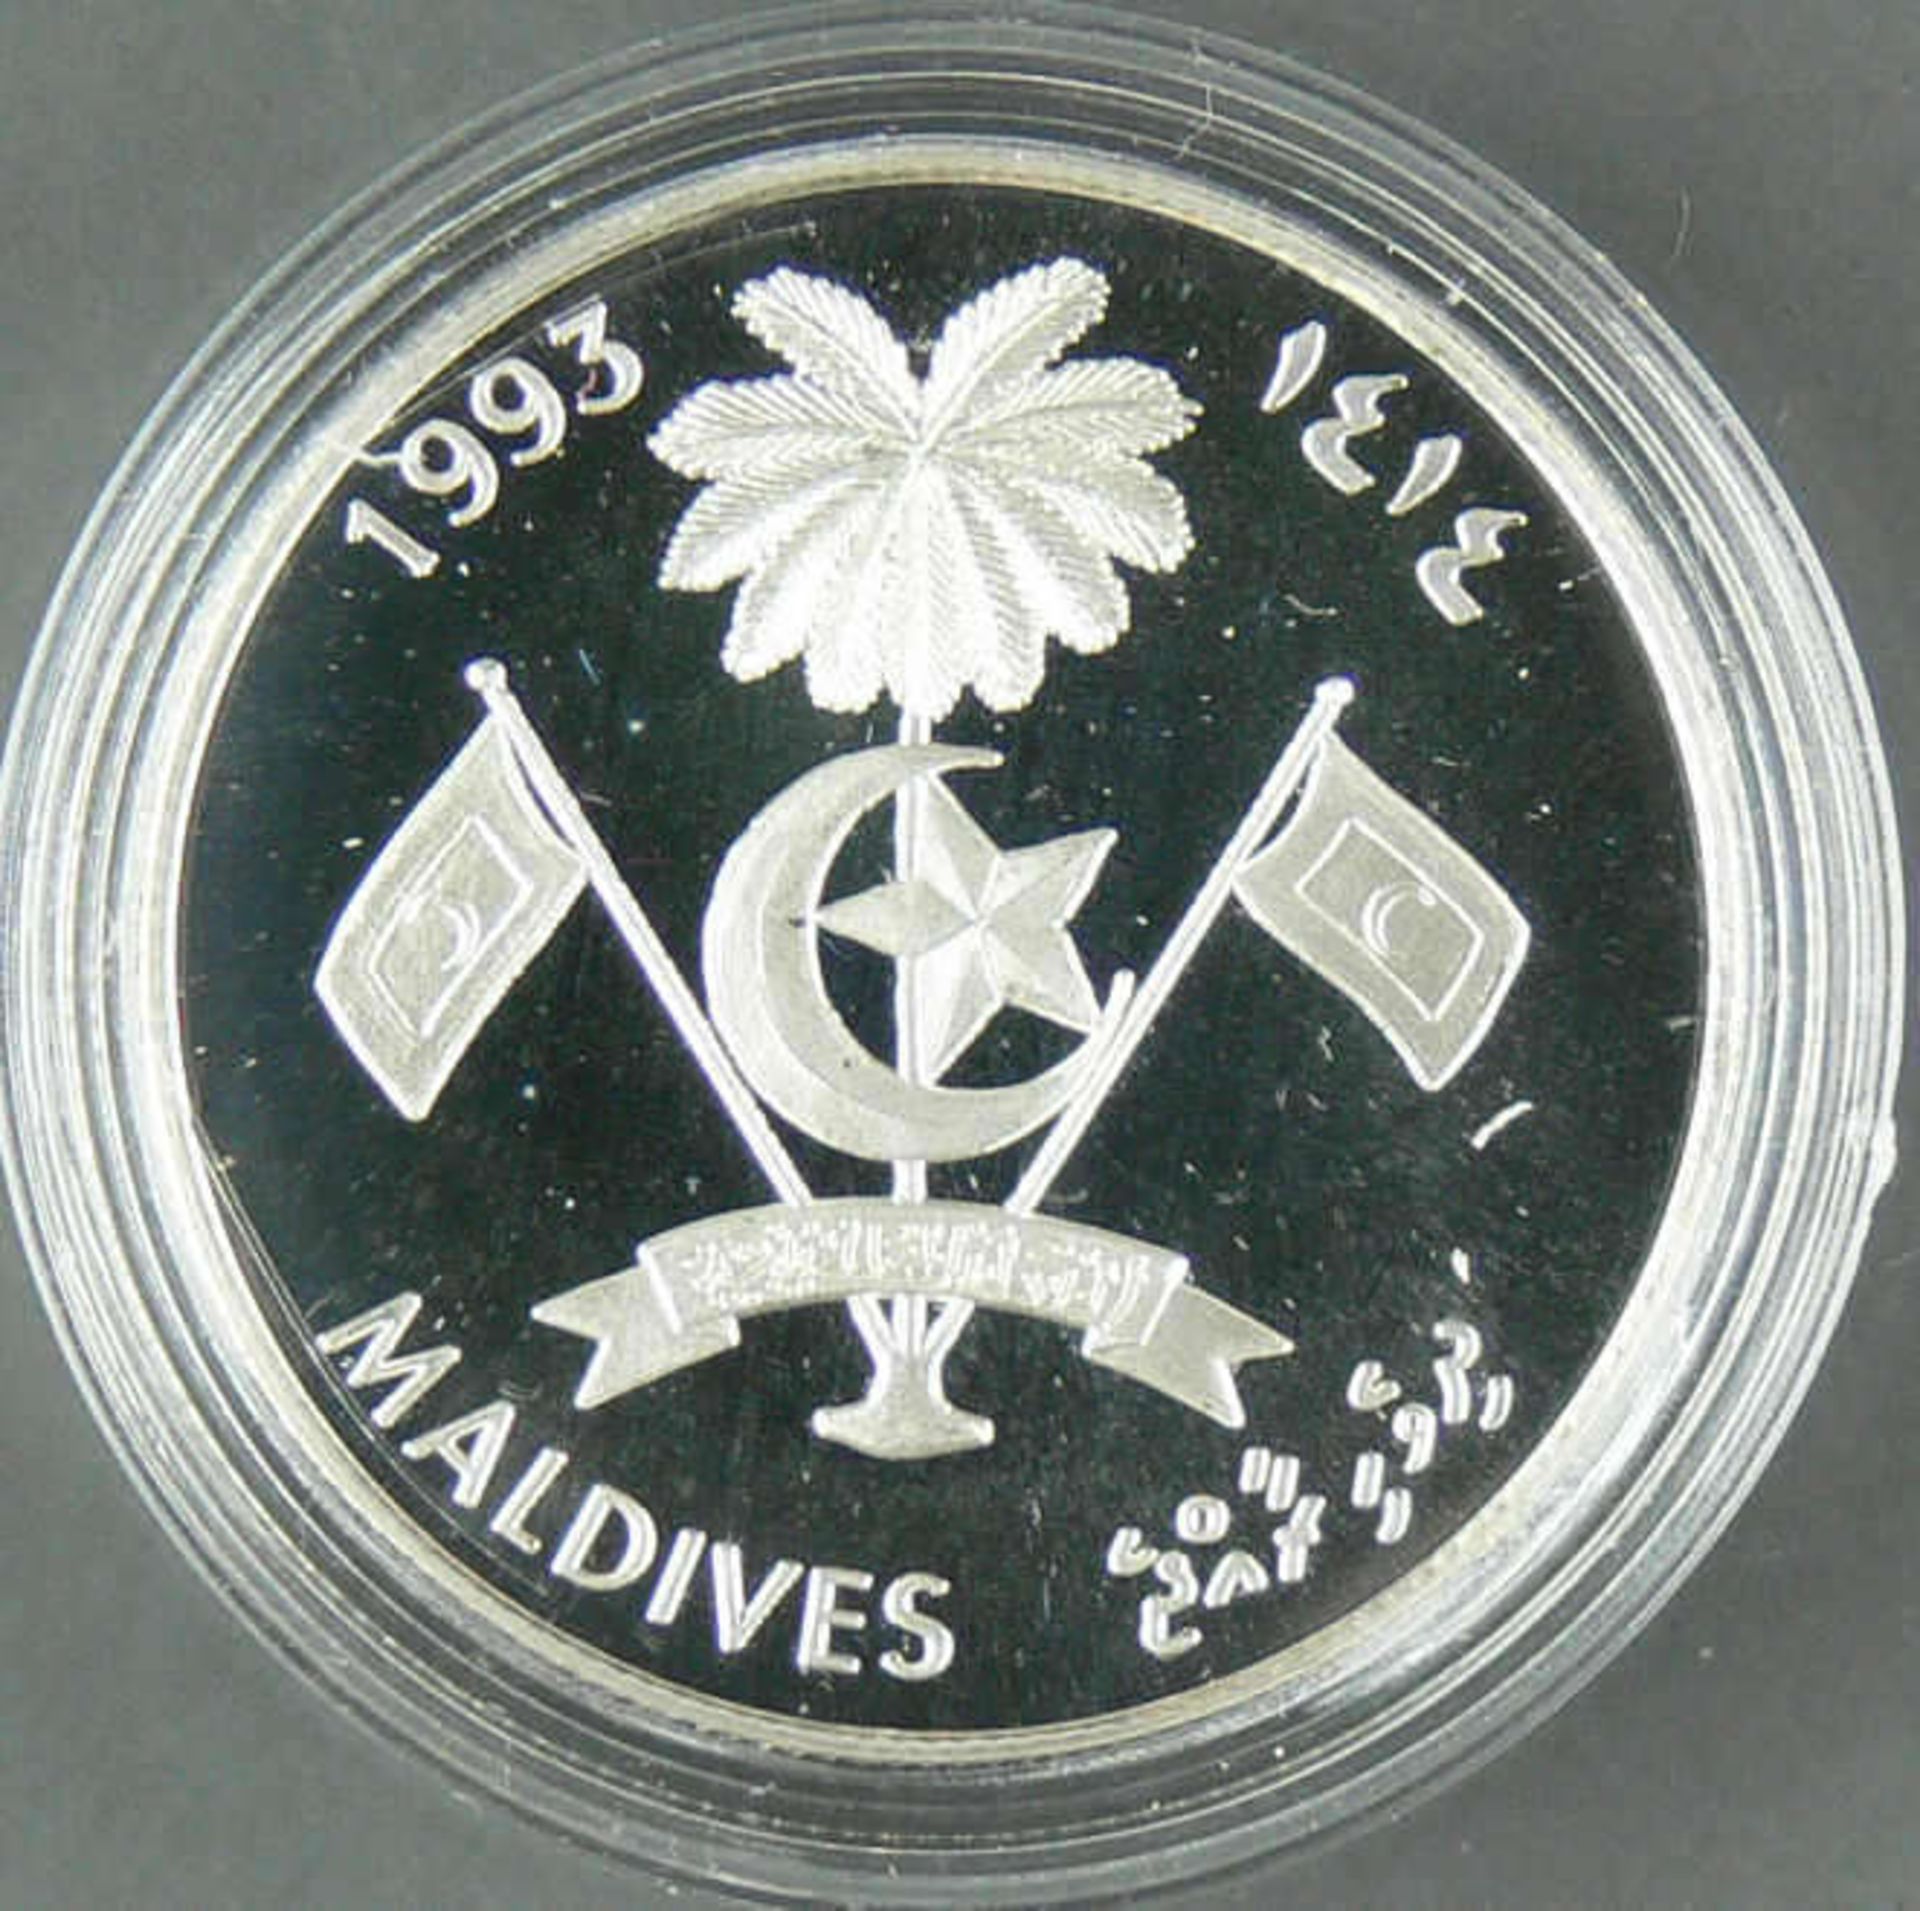 Malediven 1993, 100 Rufiyaa - Silbermünze "Cutty Sark", Silber 500, Gewicht: 10 g, Durchmesser: 30 - Image 2 of 3